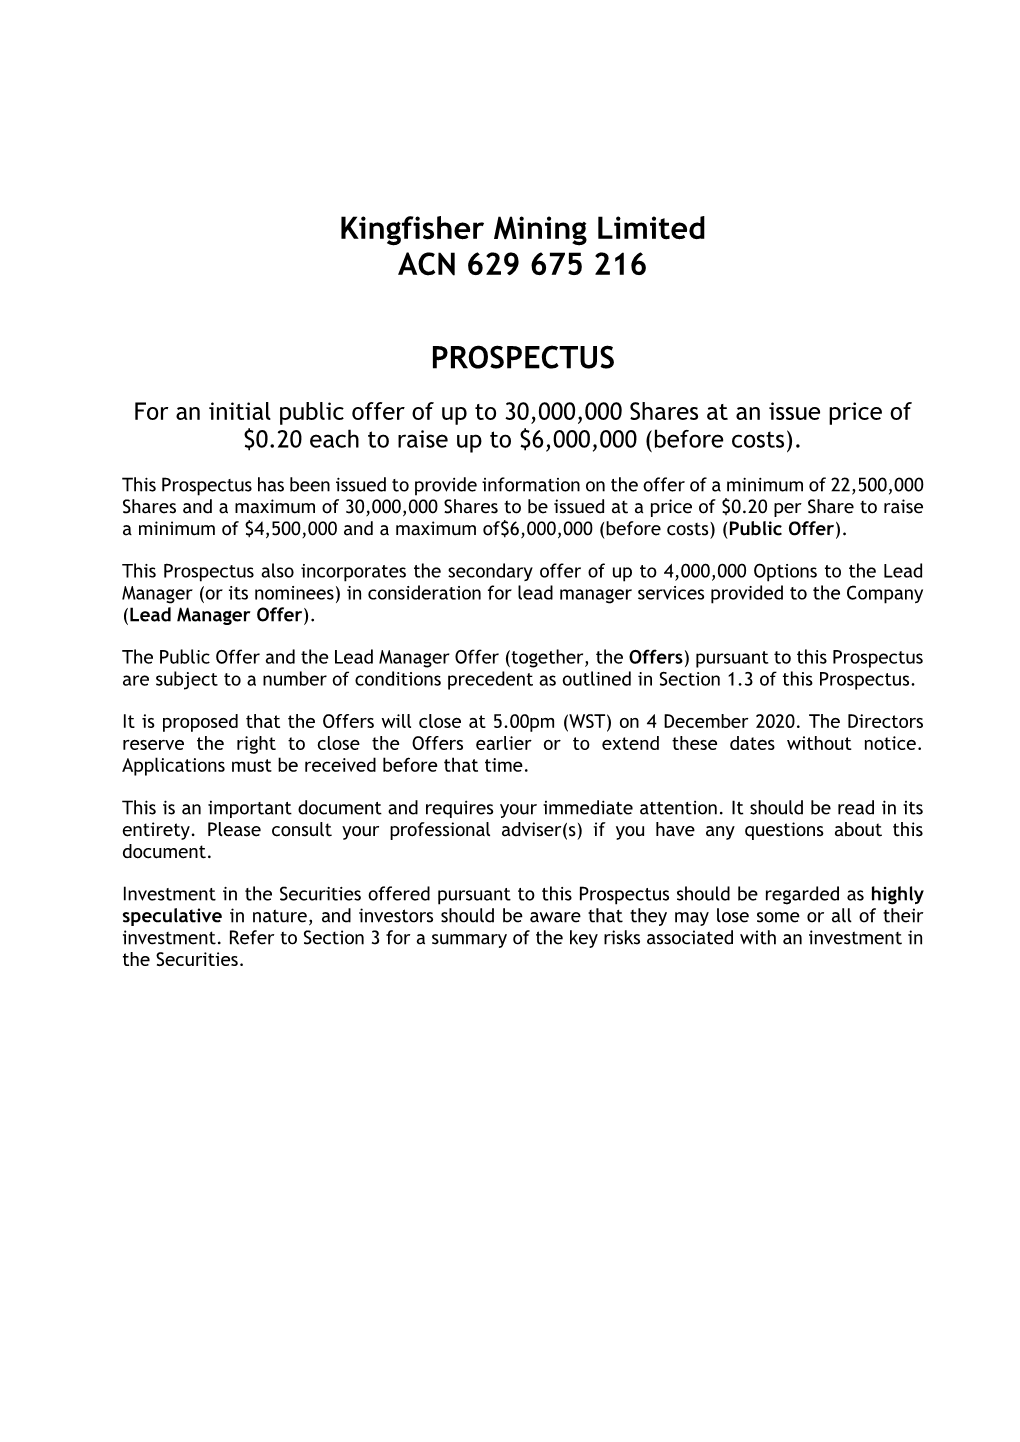 Kingfisher Mining Limited ACN 629 675 216 PROSPECTUS